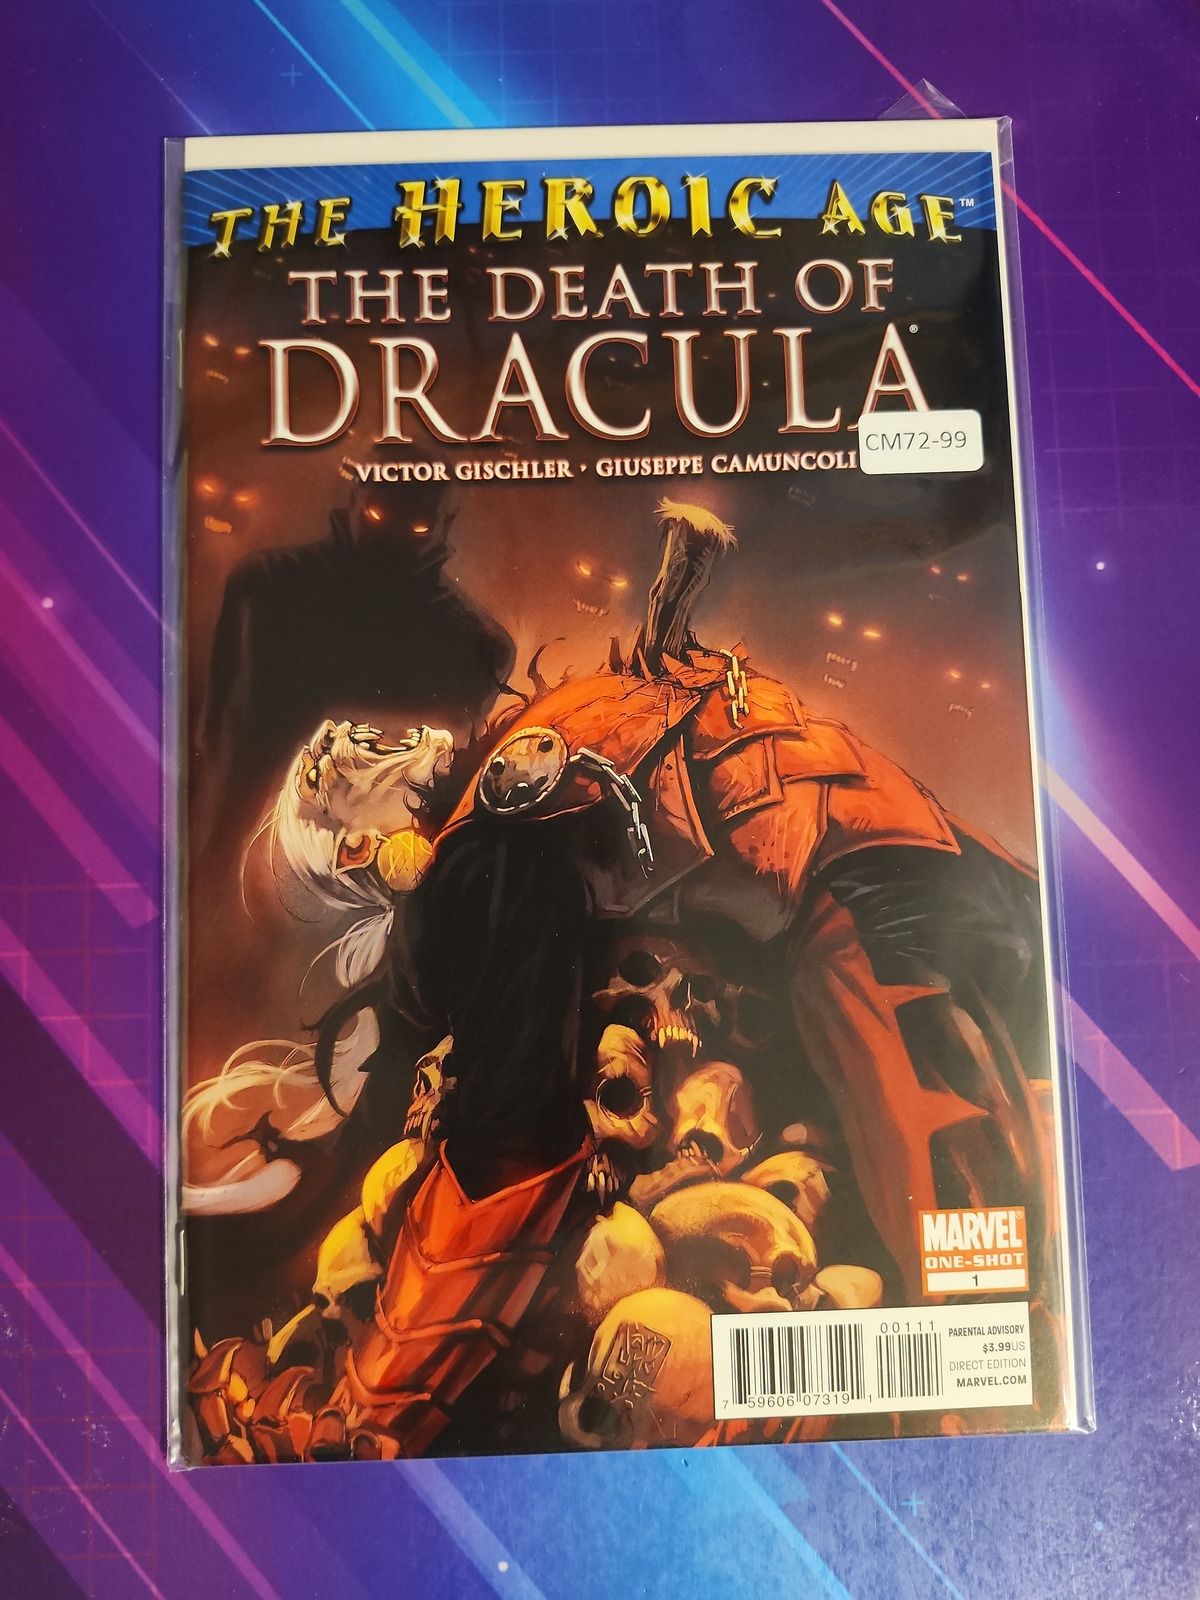 DEATH OF DRACULA #1 ONE-SHOT HIGH GRADE MARVEL COMIC BOOK CM72-99